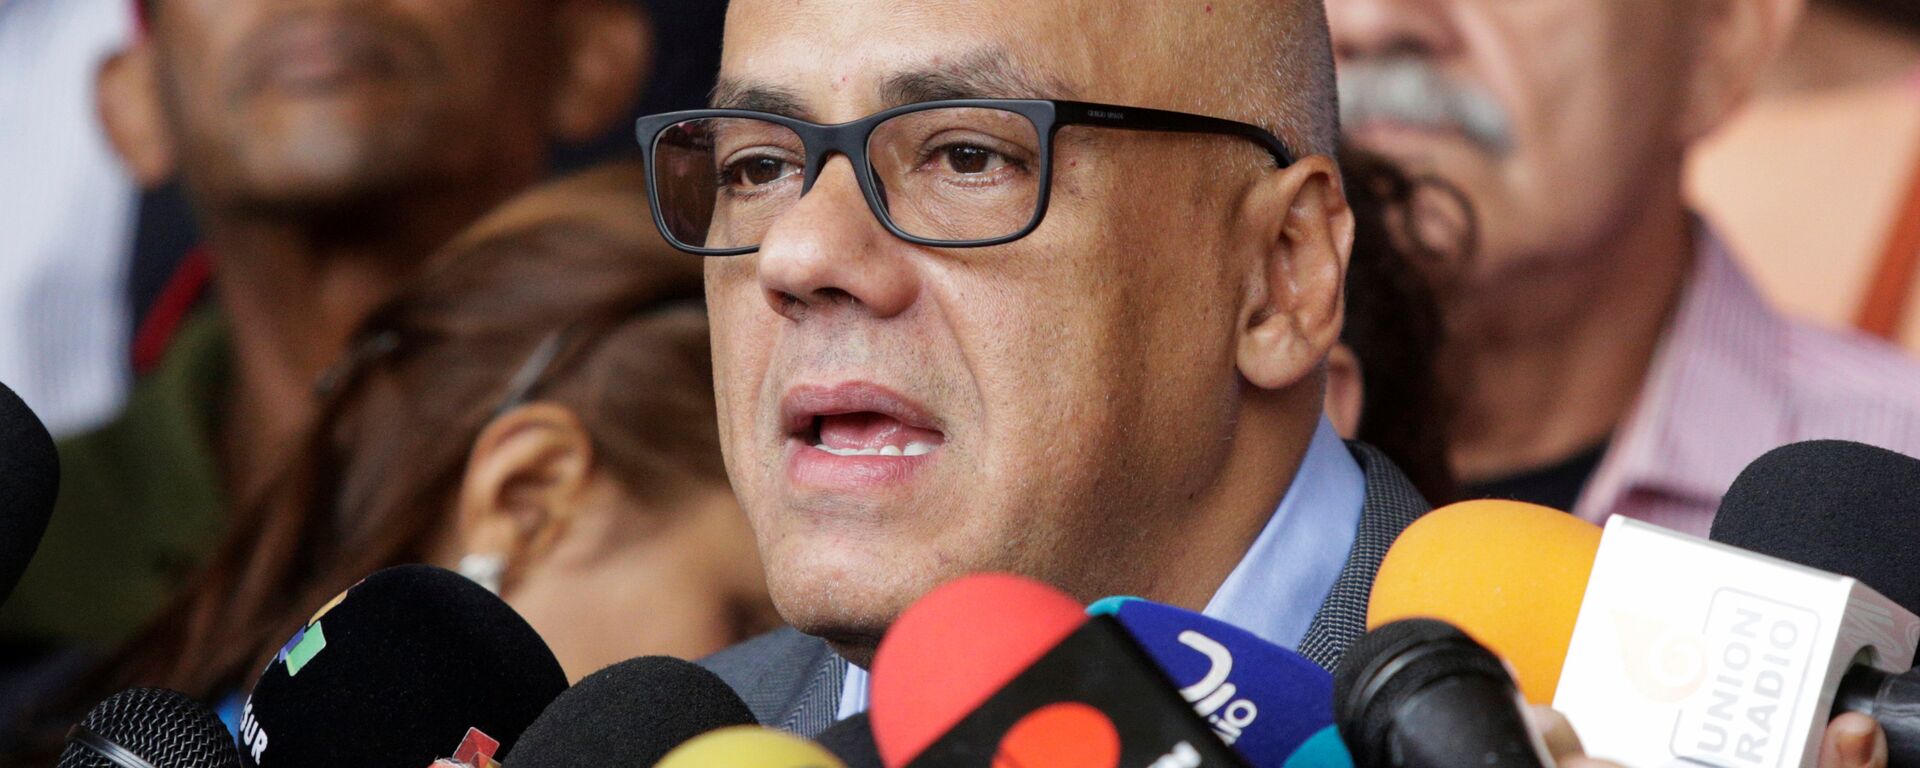 Jorge Rodriguez, mayor of Caracas talks to the media after challenging the opposition's referendum proposal against Venezuela's President Maduro in Caracas - Sputnik Mundo, 1920, 27.04.2021